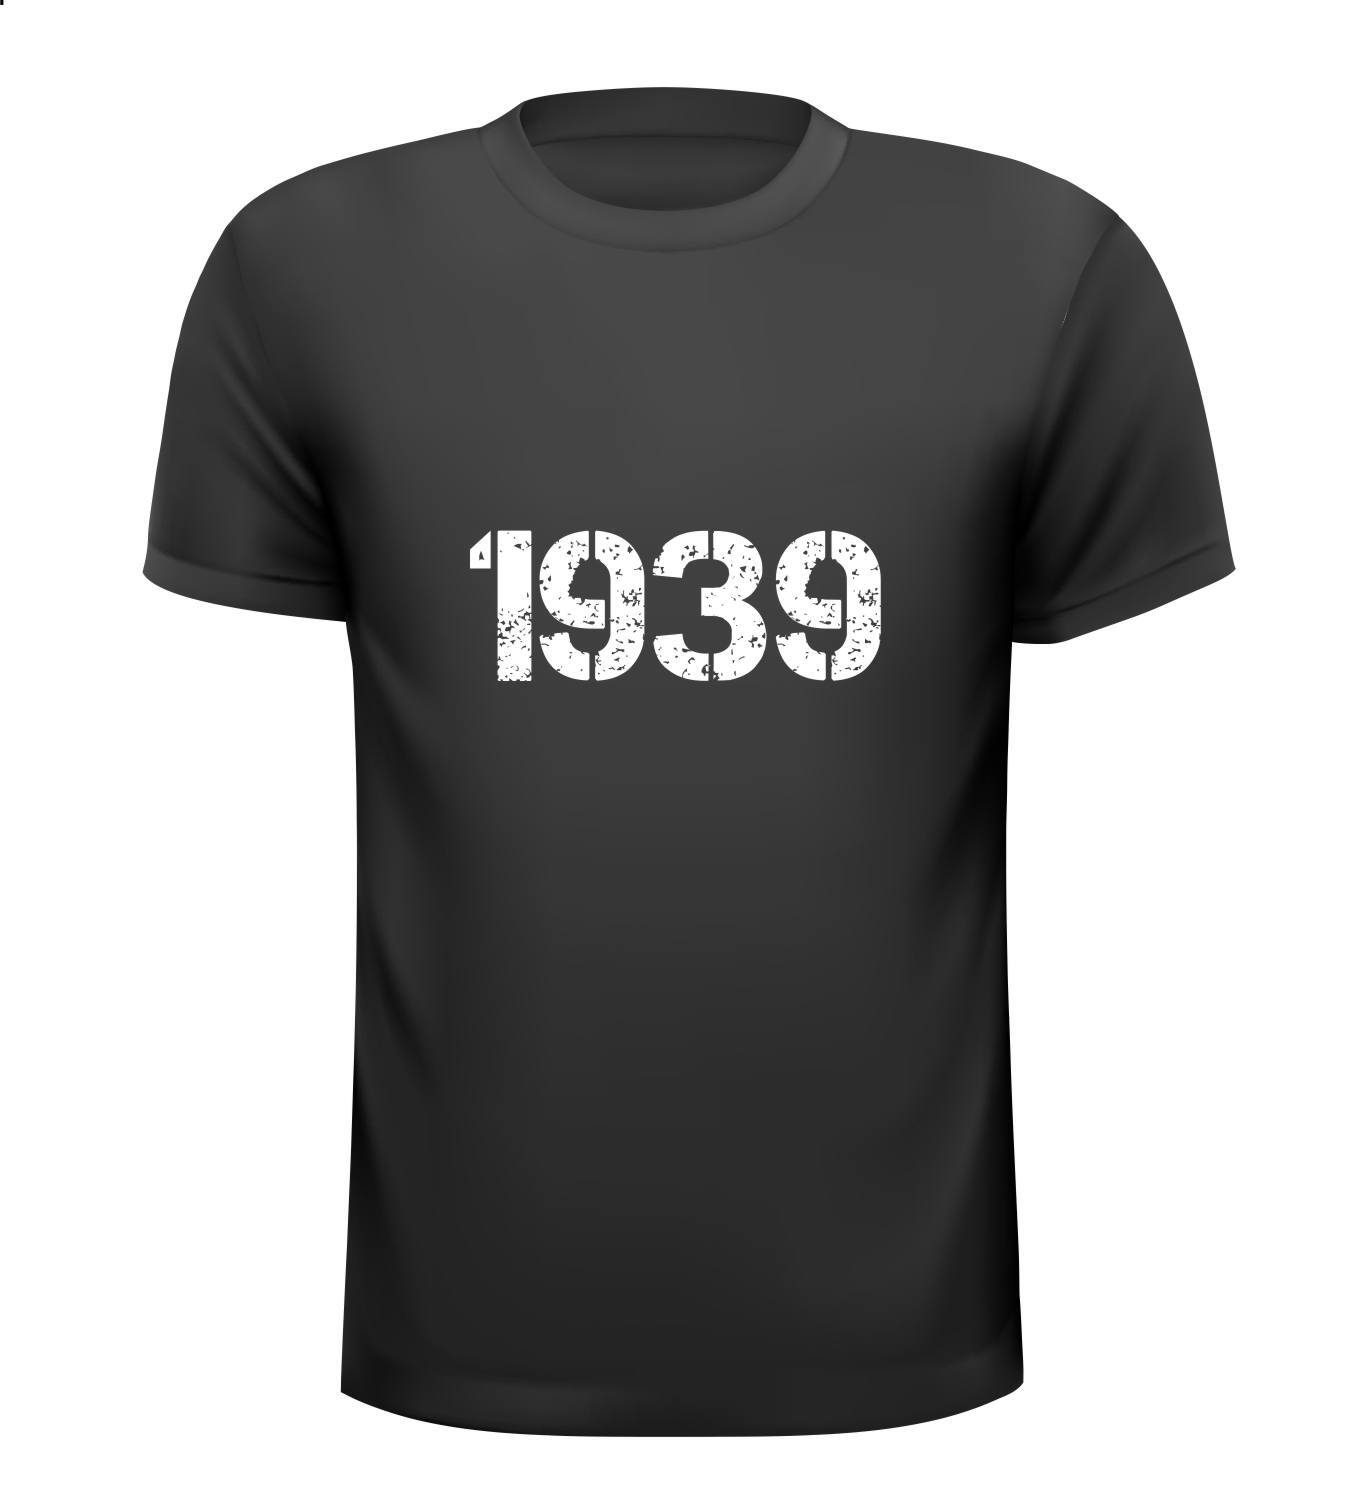 1939 shirt